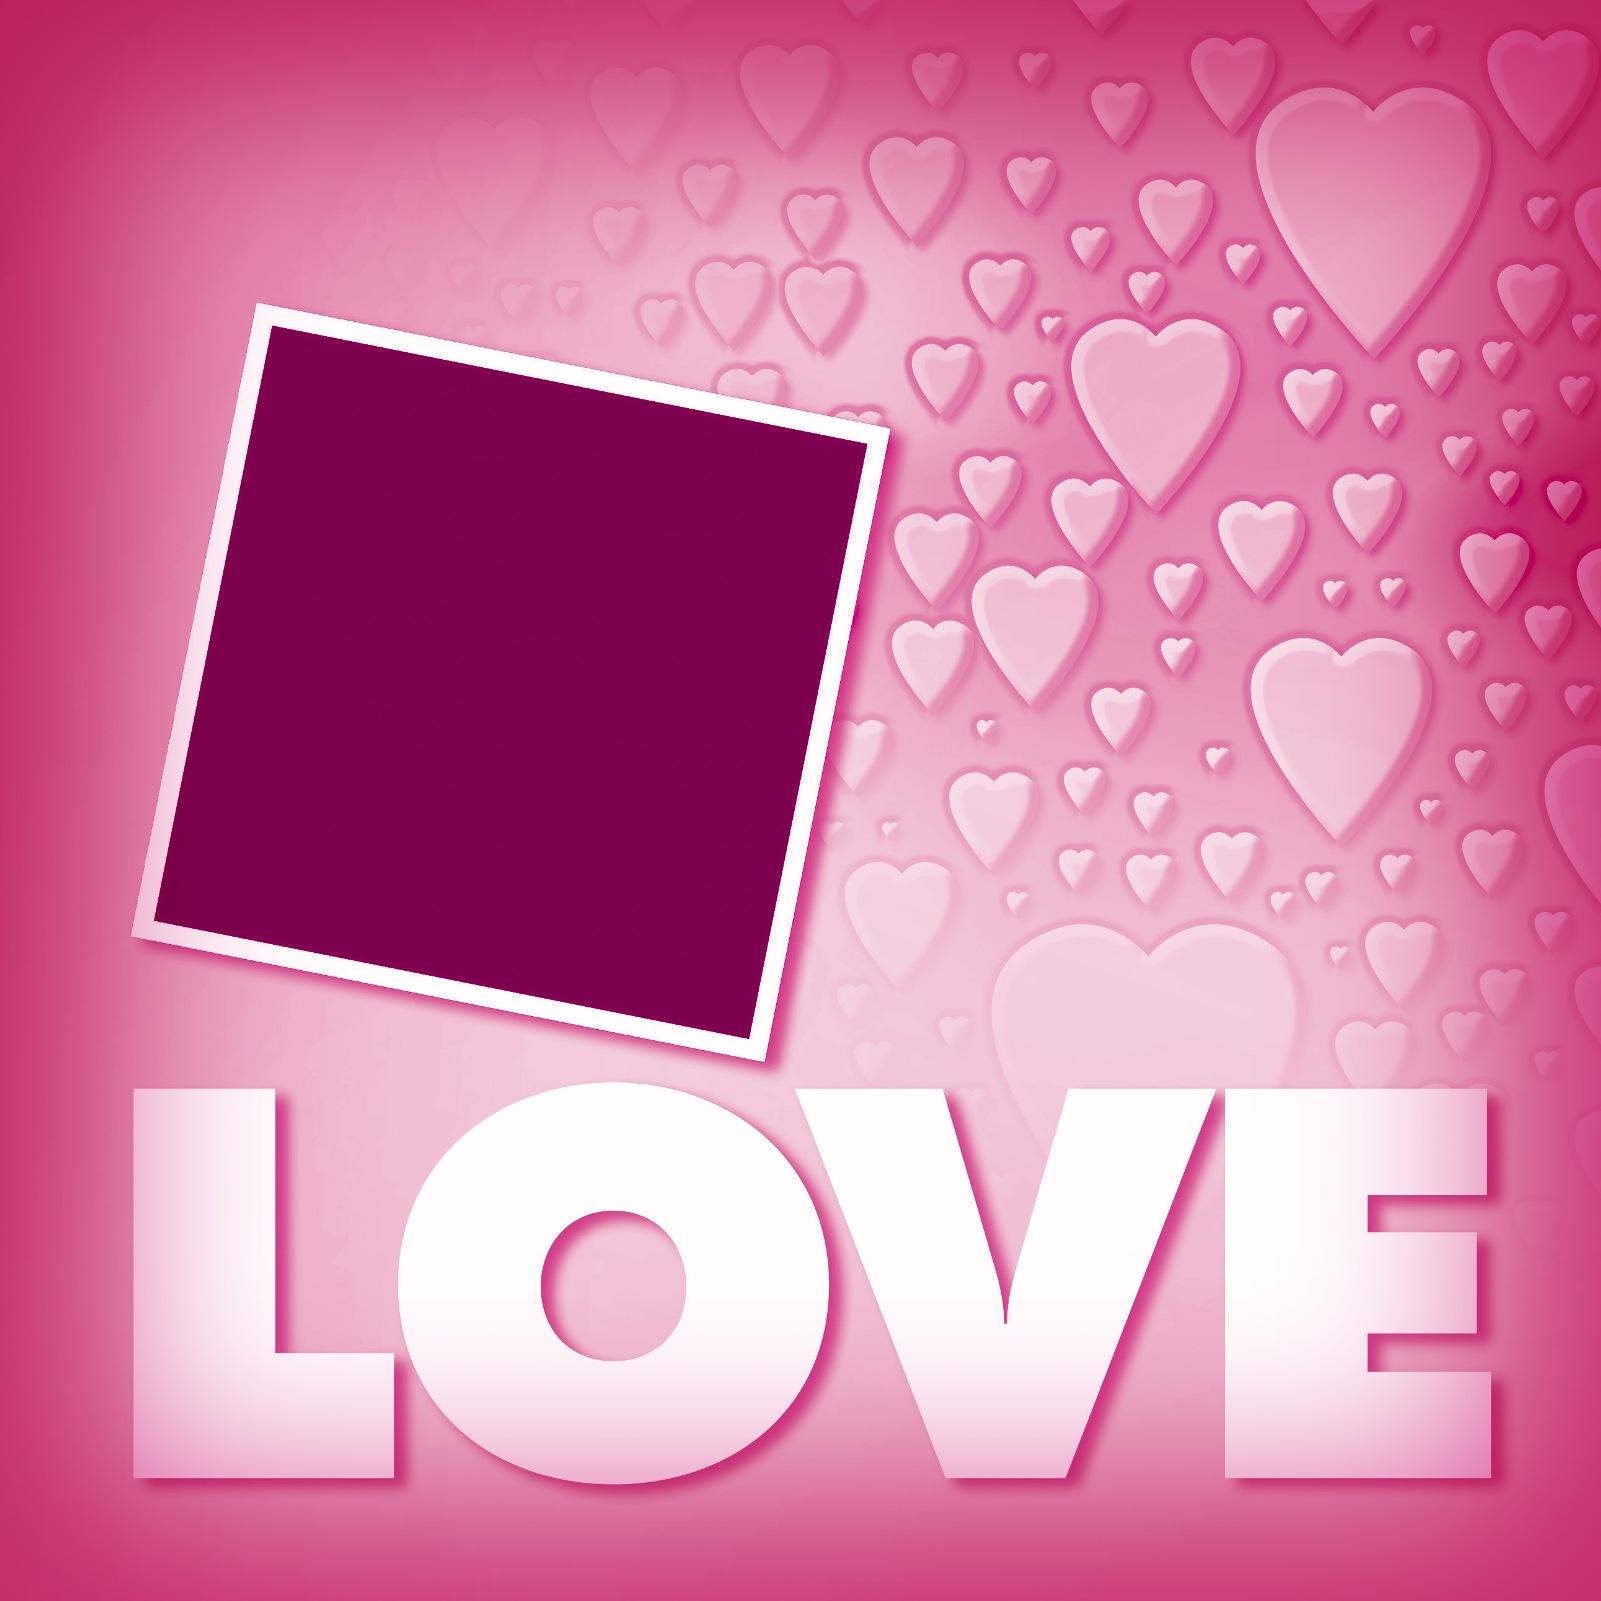 Heart love background free desktop background wallpaper image